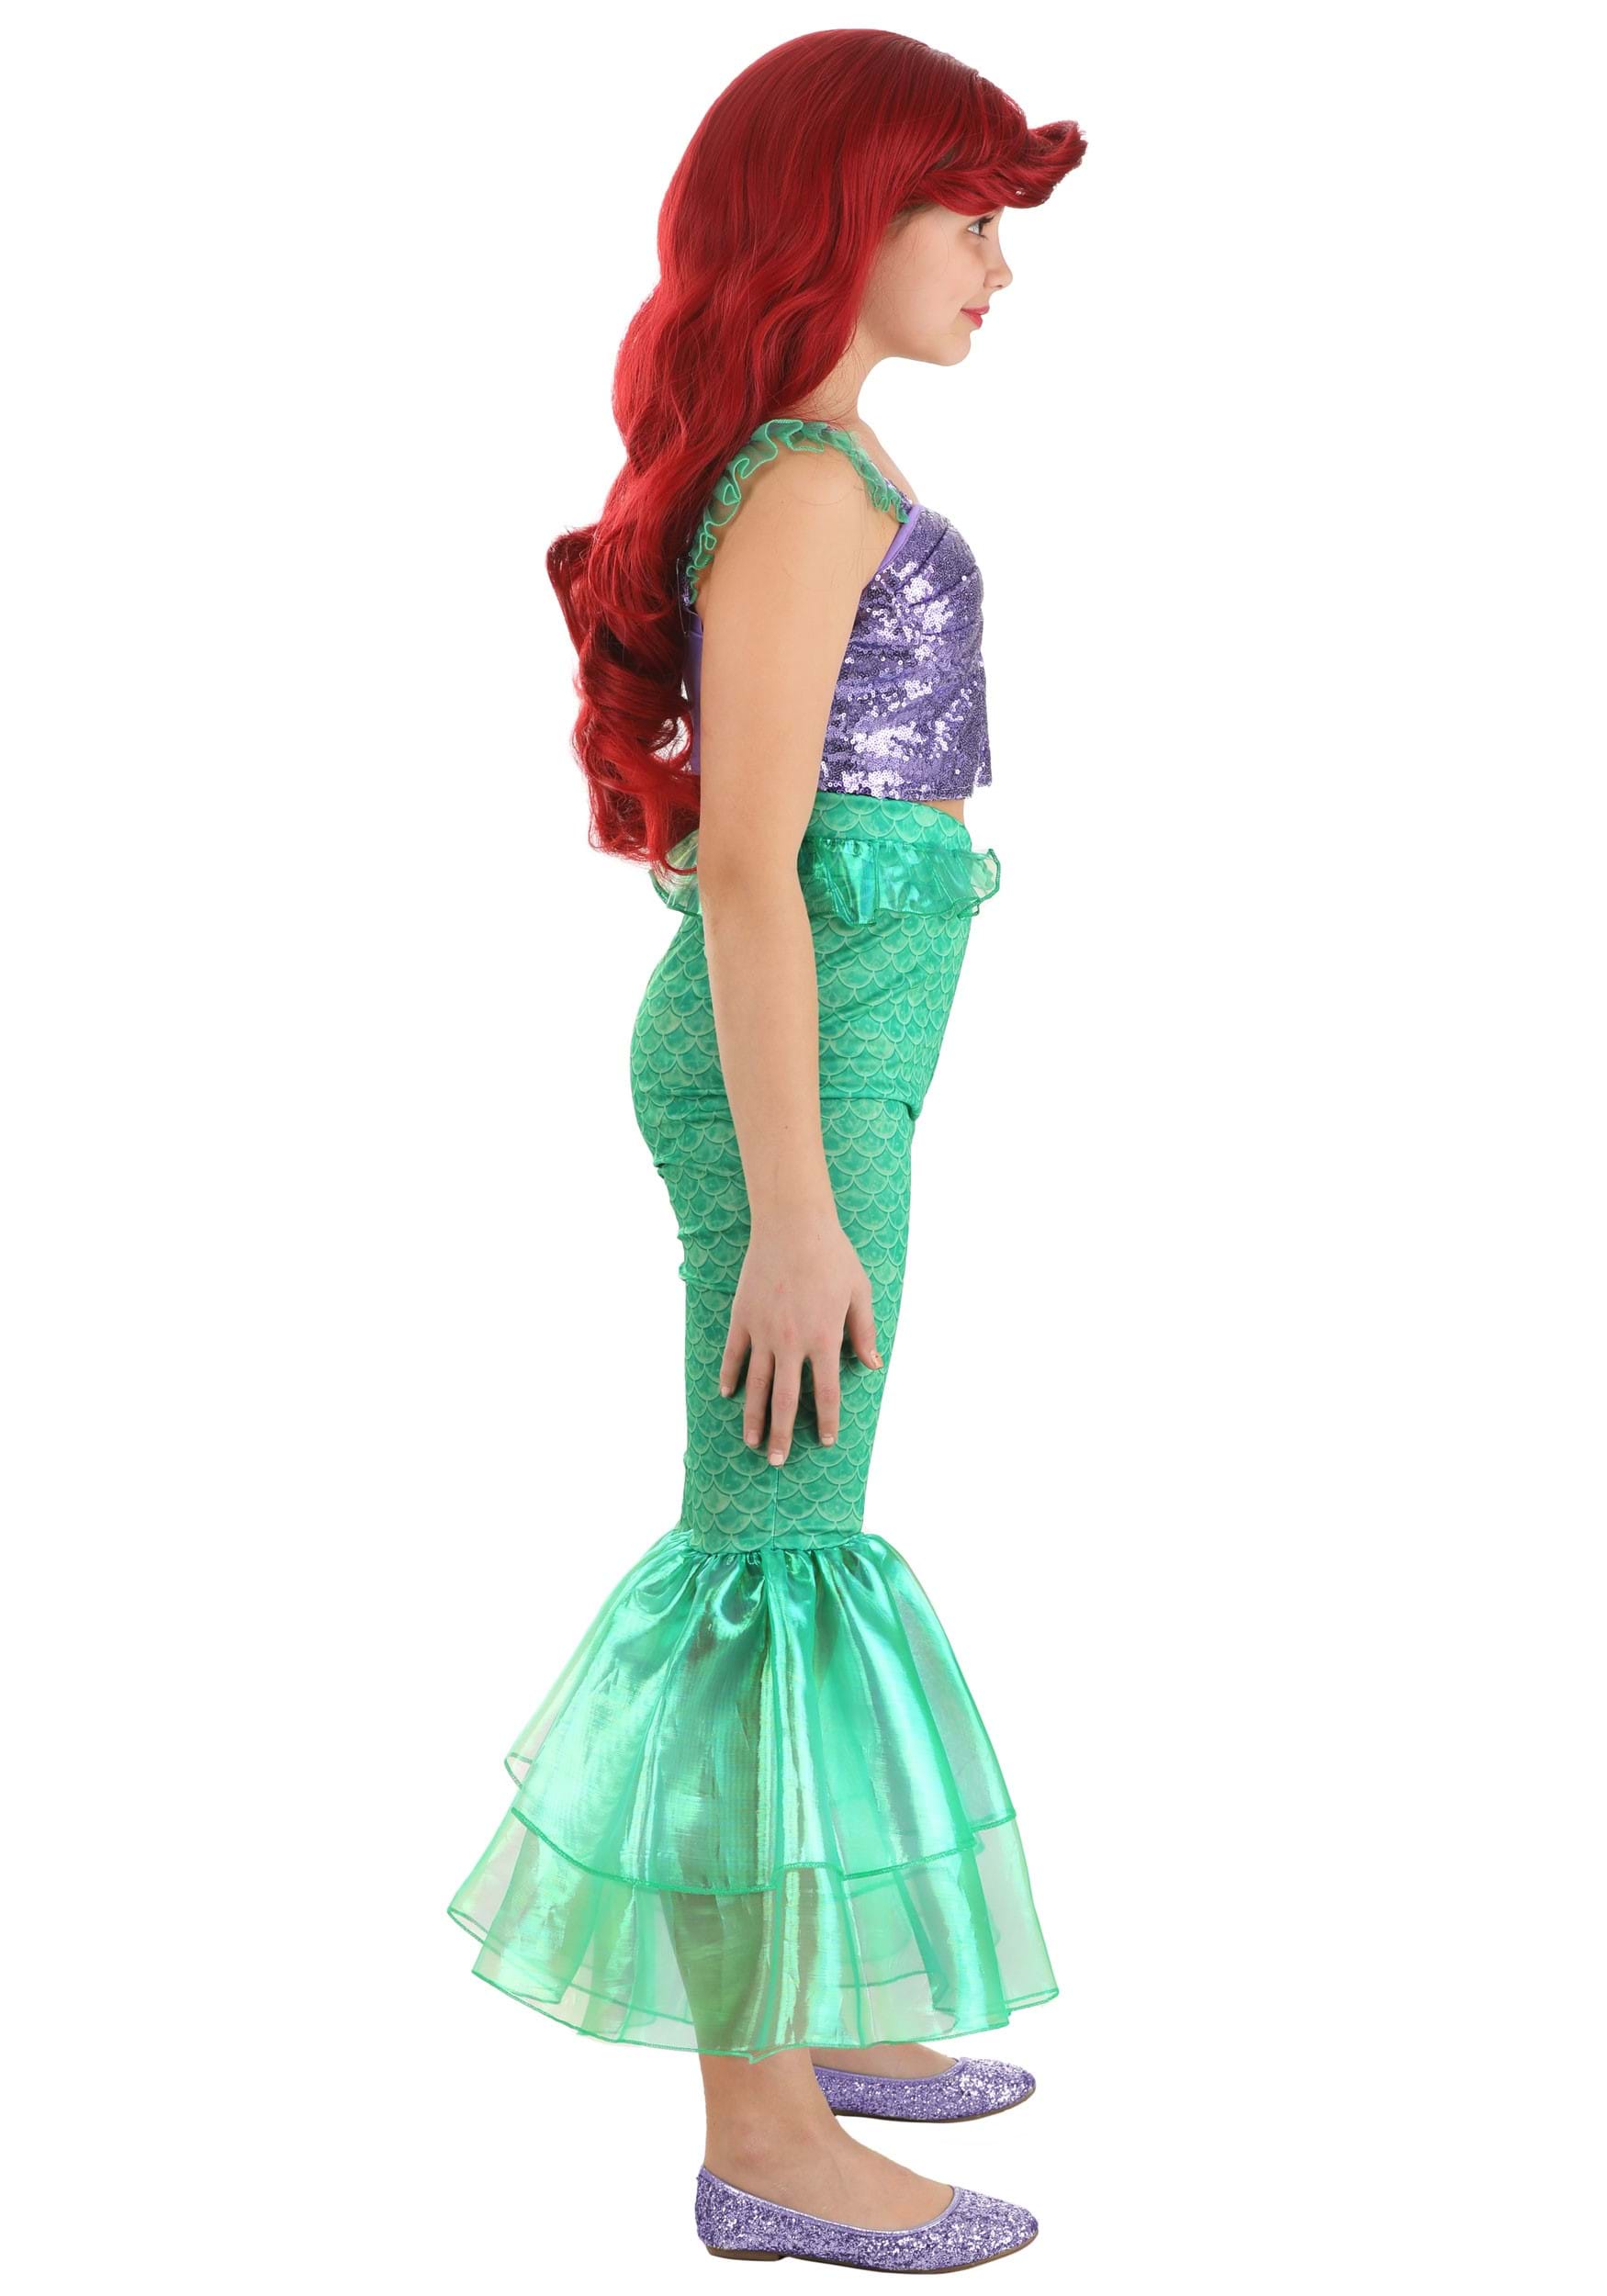 Girl's Little Mermaid Ariel Costume